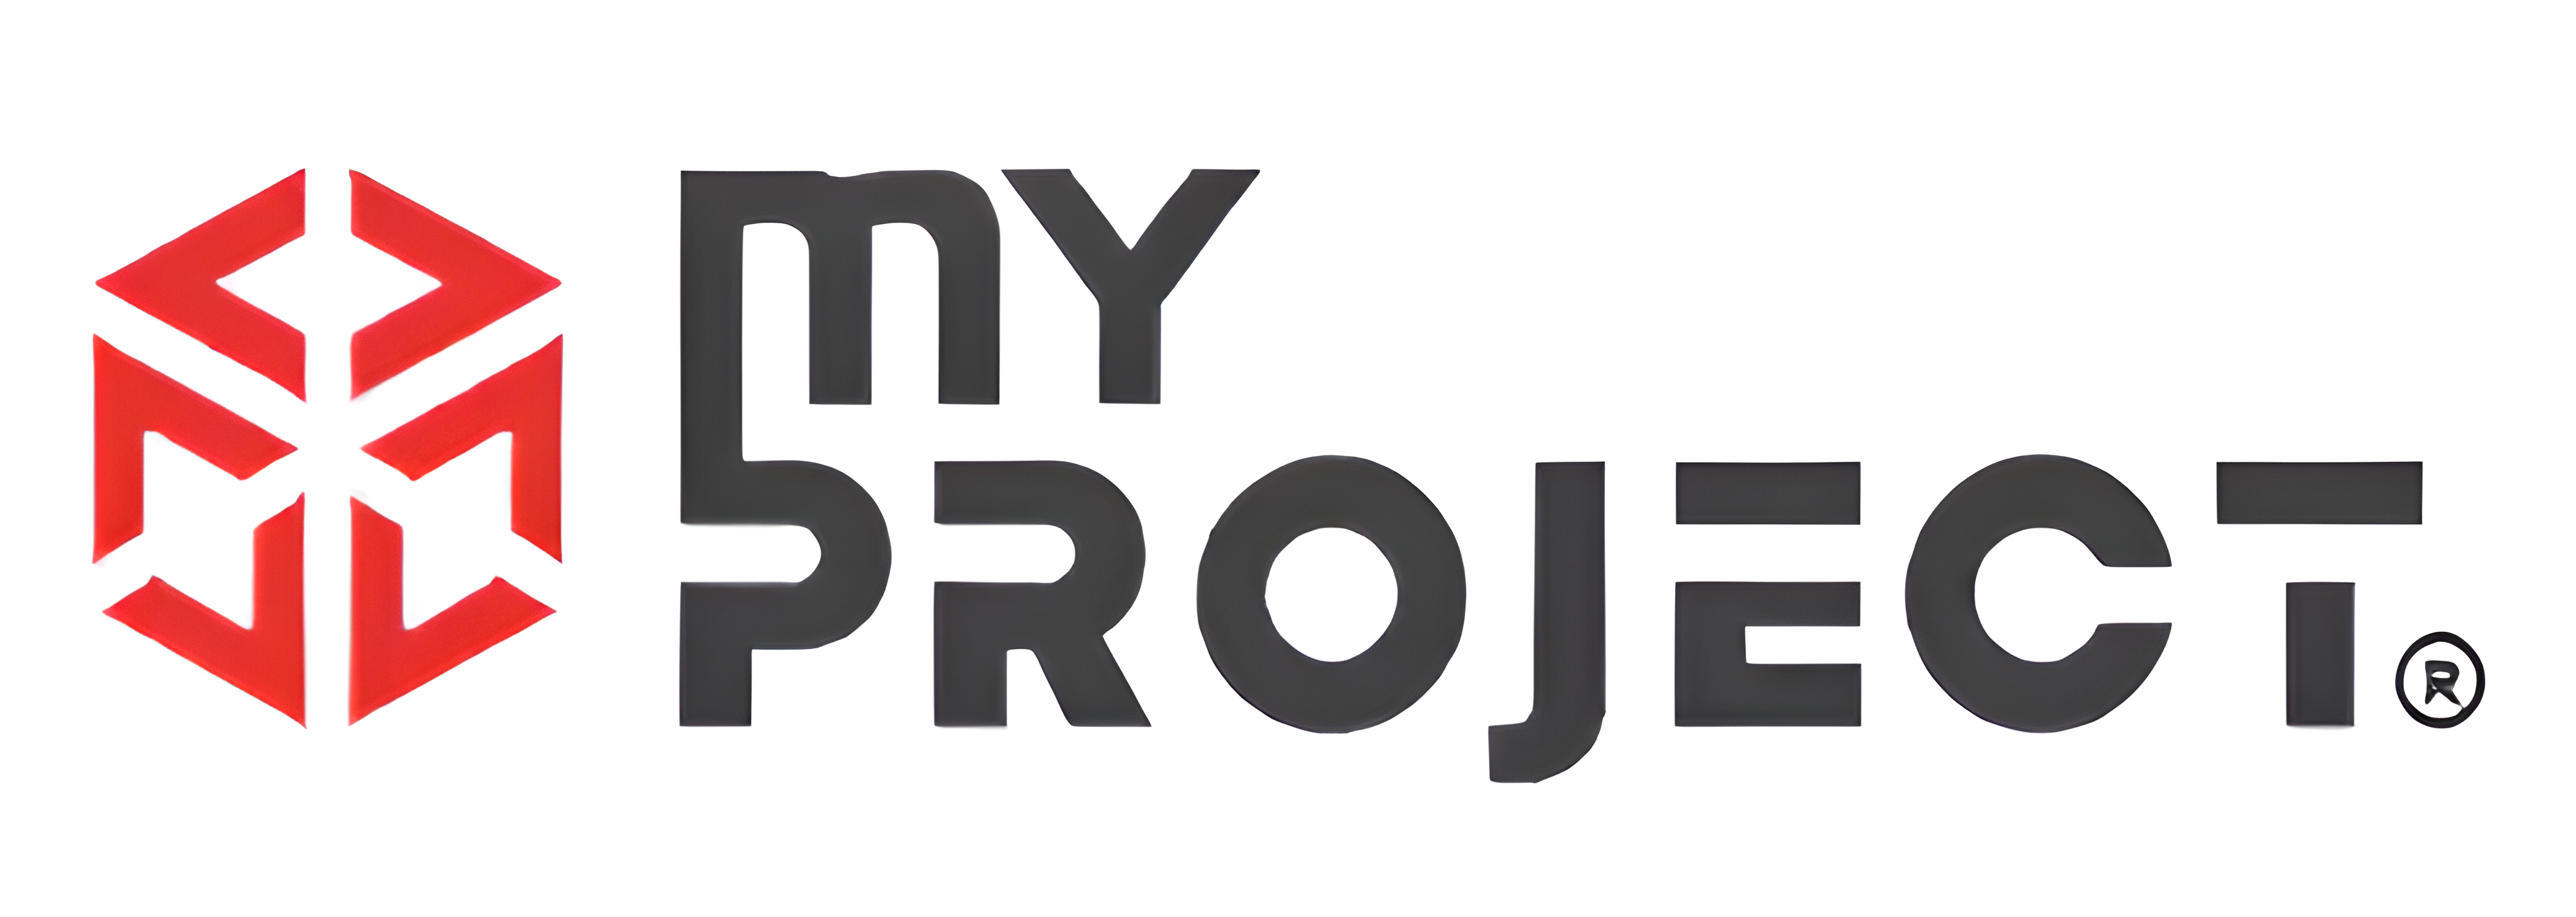 My Project - logo